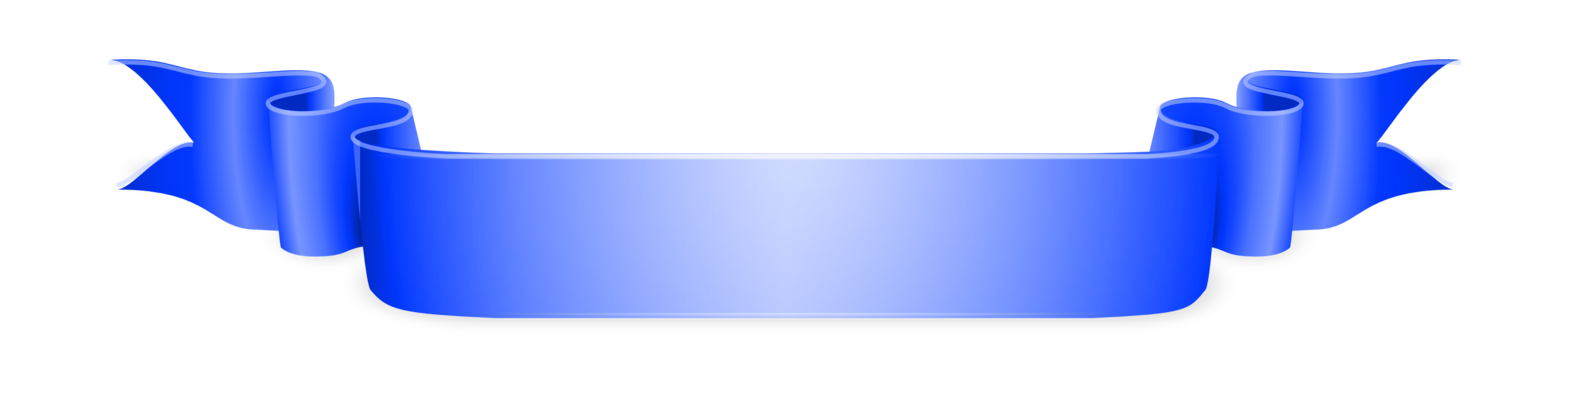 Голубая лента бесплатно PNG Image